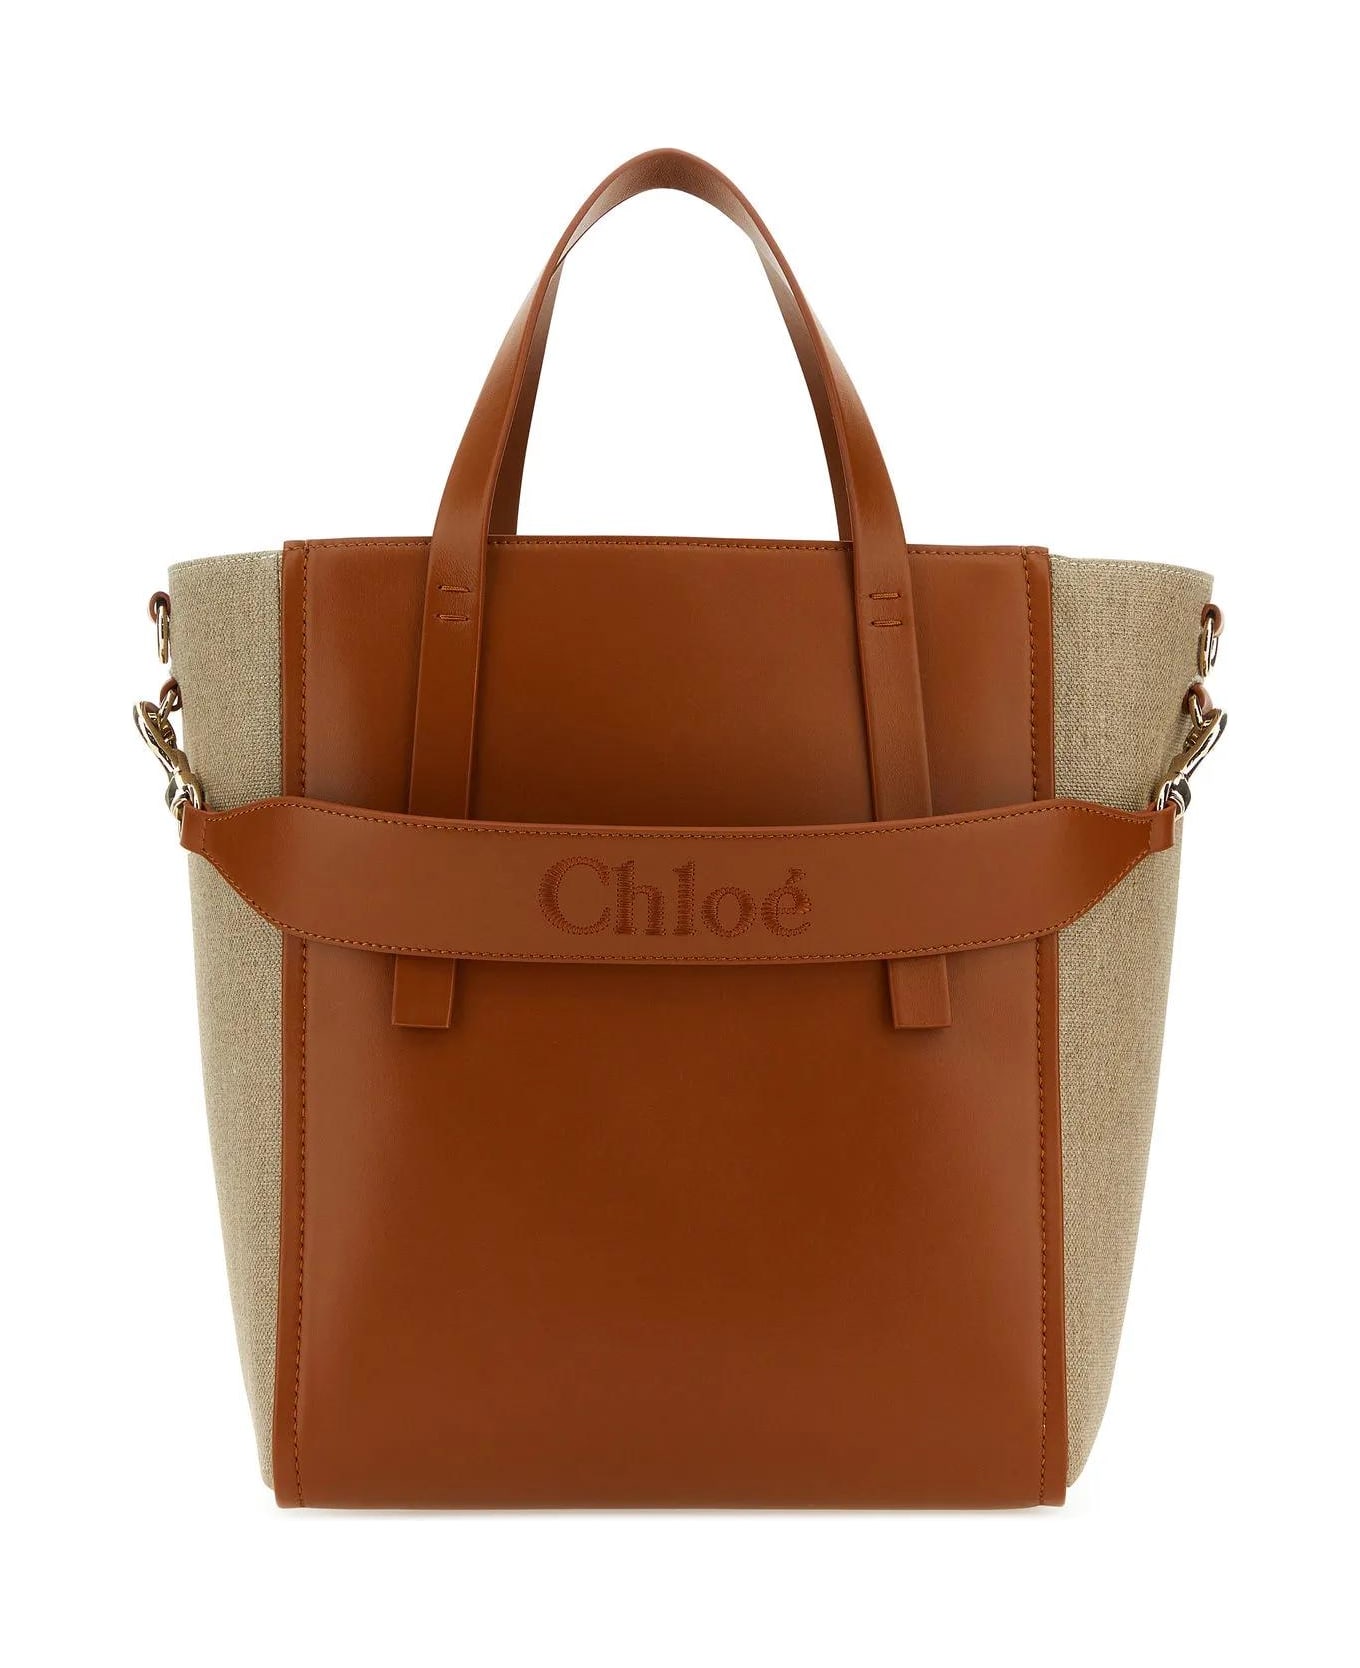 Chloé Sense Shopping Bag - CARAMEL トートバッグ